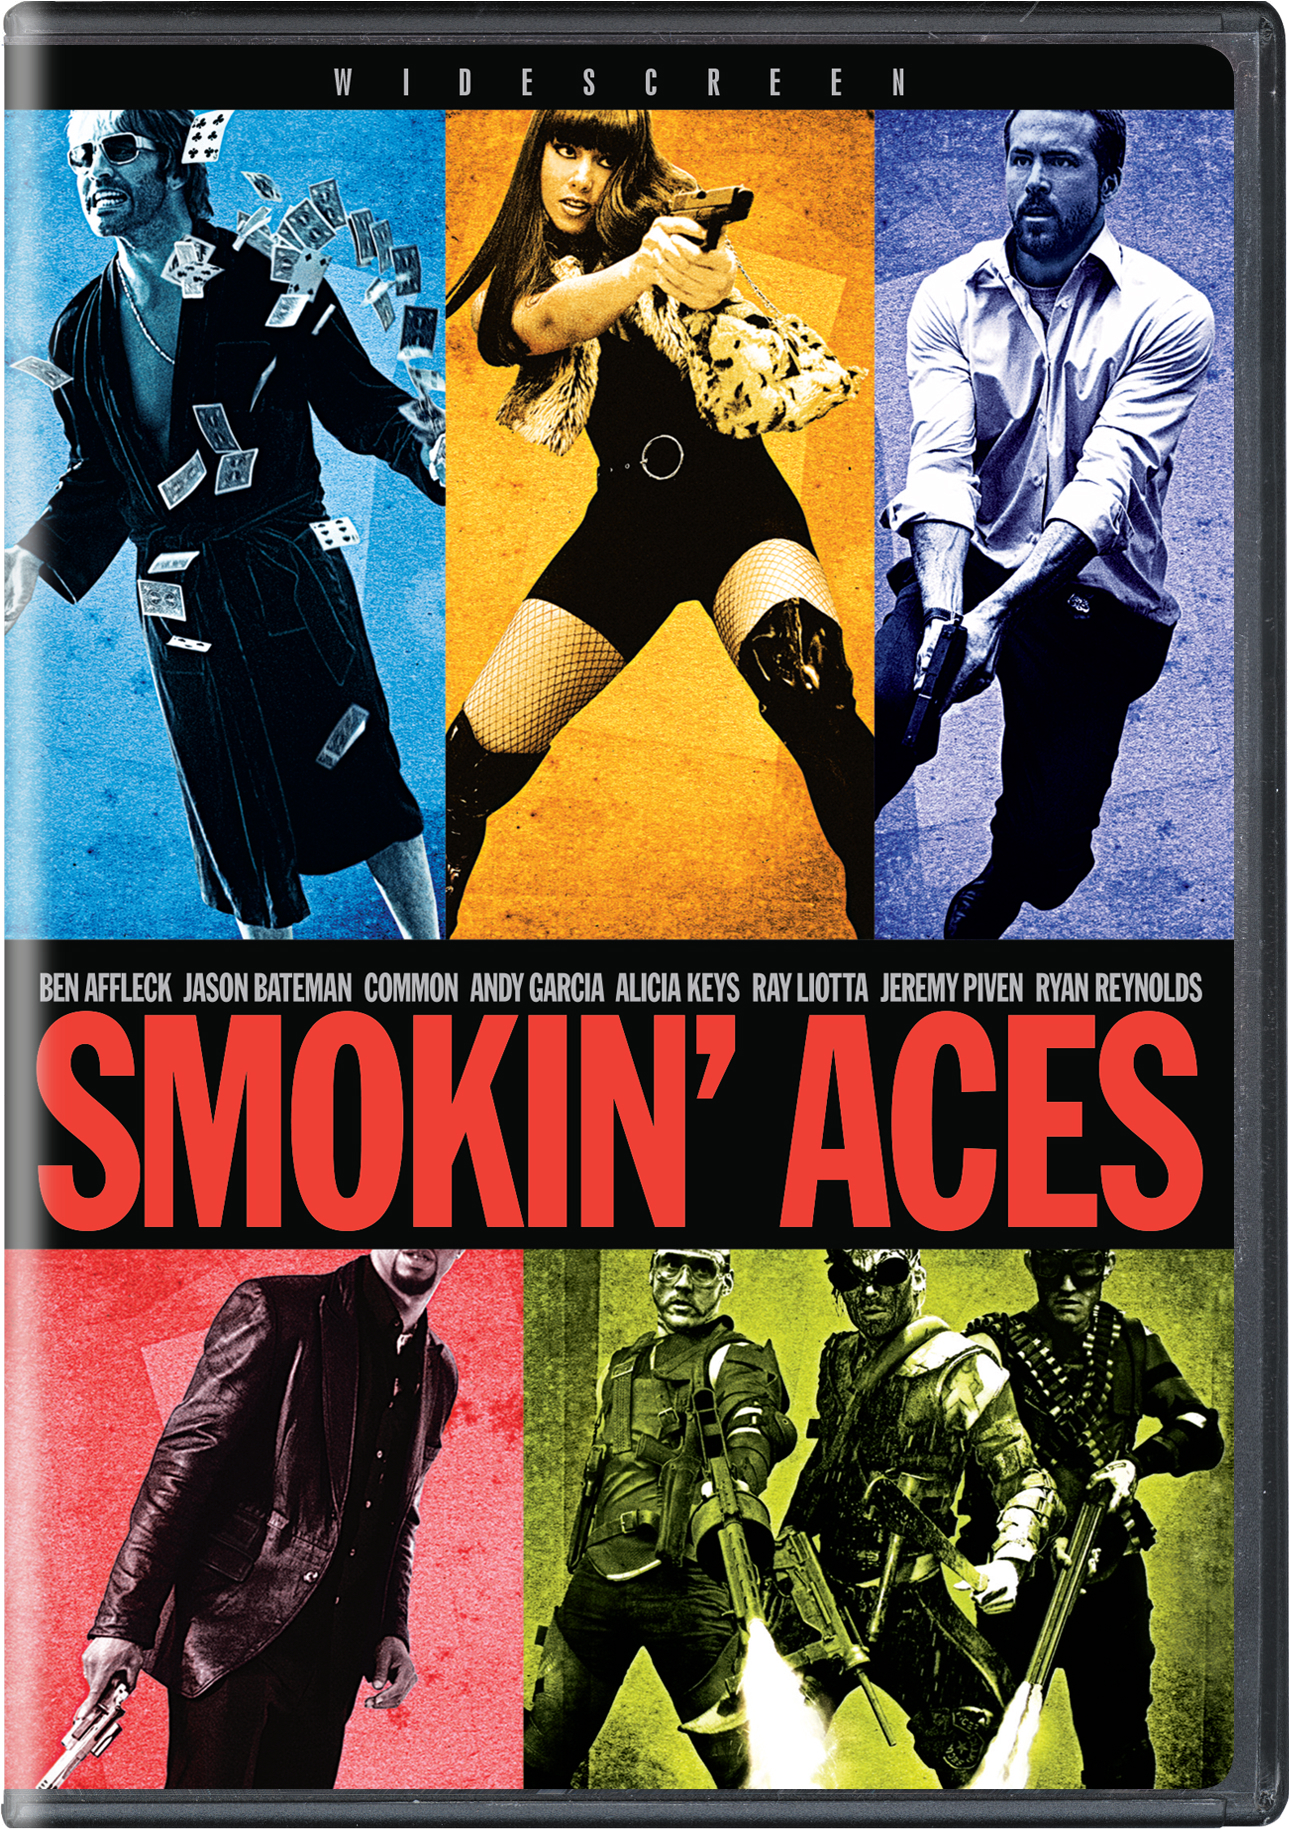 Smokin' Aces (DVD Widescreen) - DVD [ 2007 ]  - Thriller Movies On DVD - Movies On GRUV